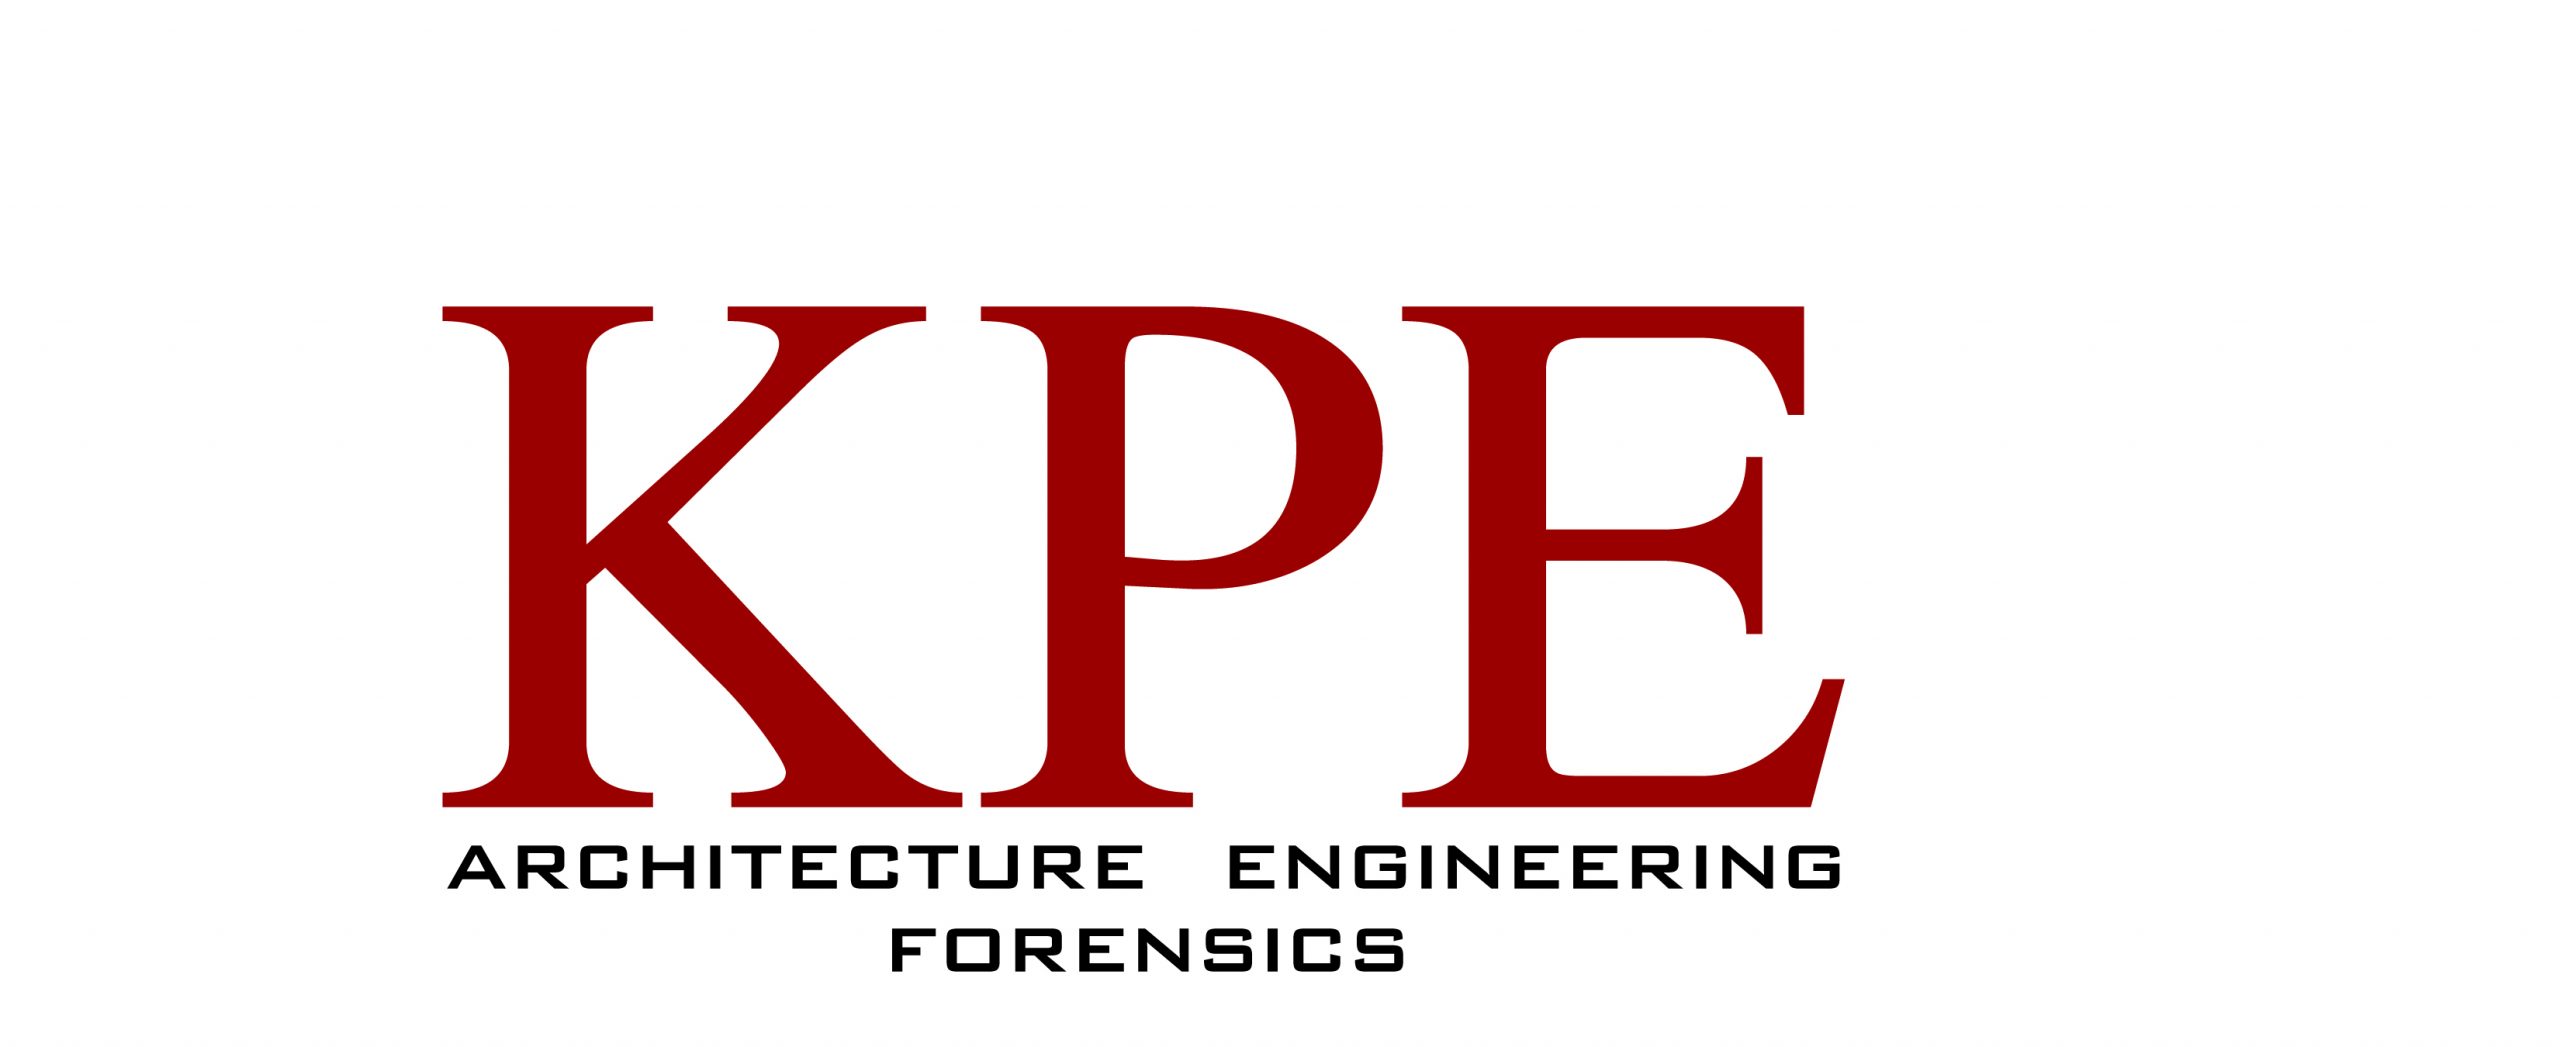 KPE Architecture Engineering Forensics Logo